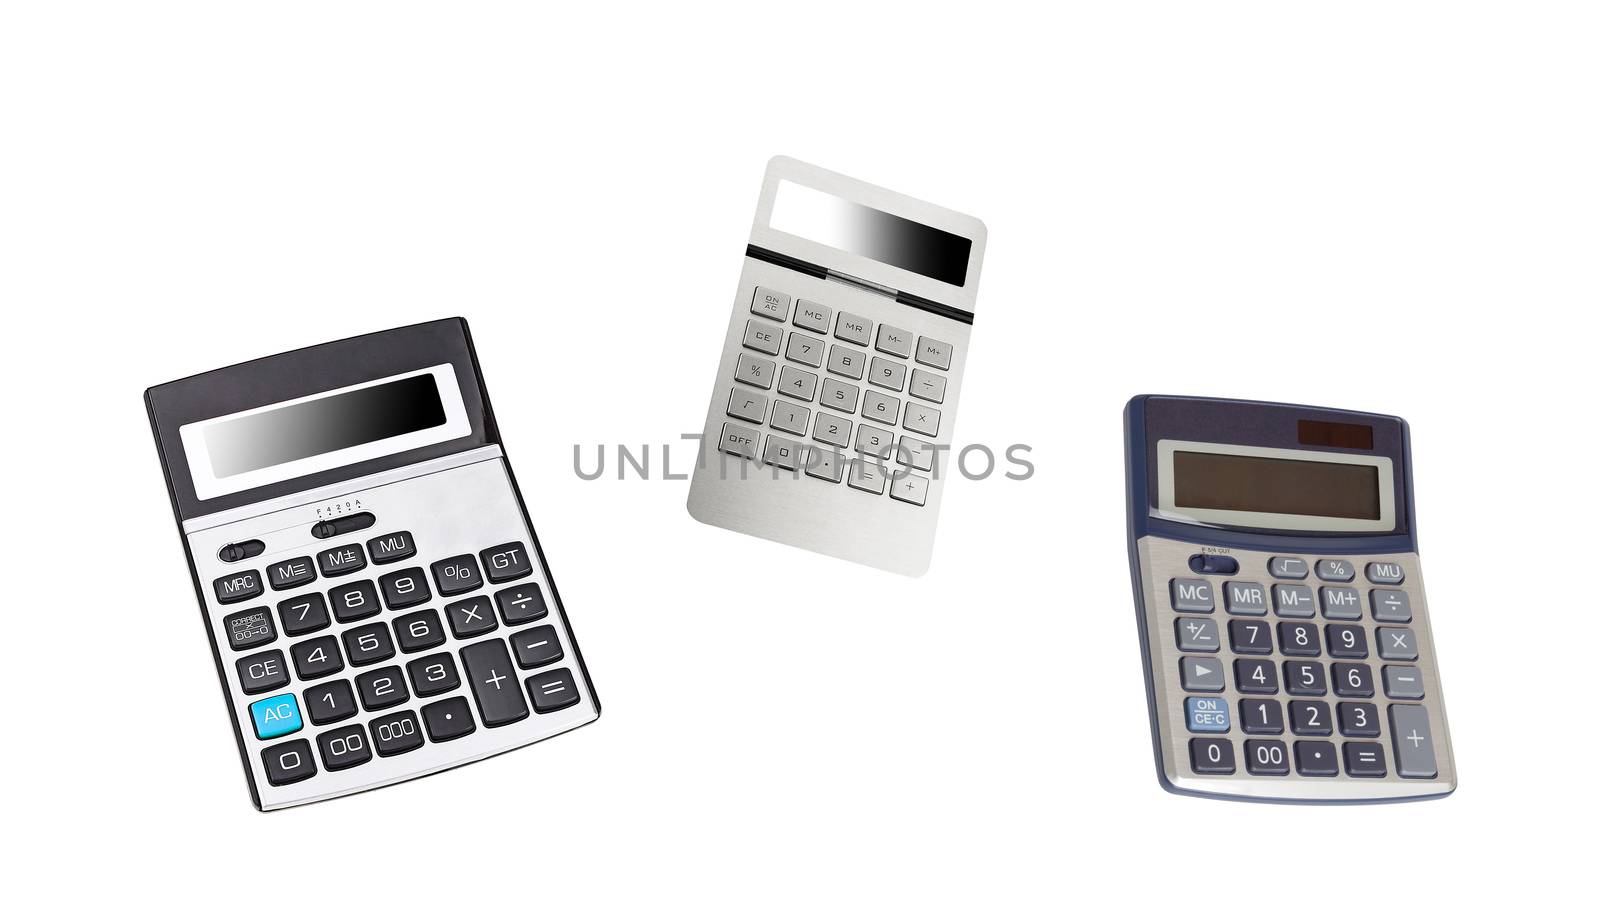 Top view of a calculators by ozaiachin